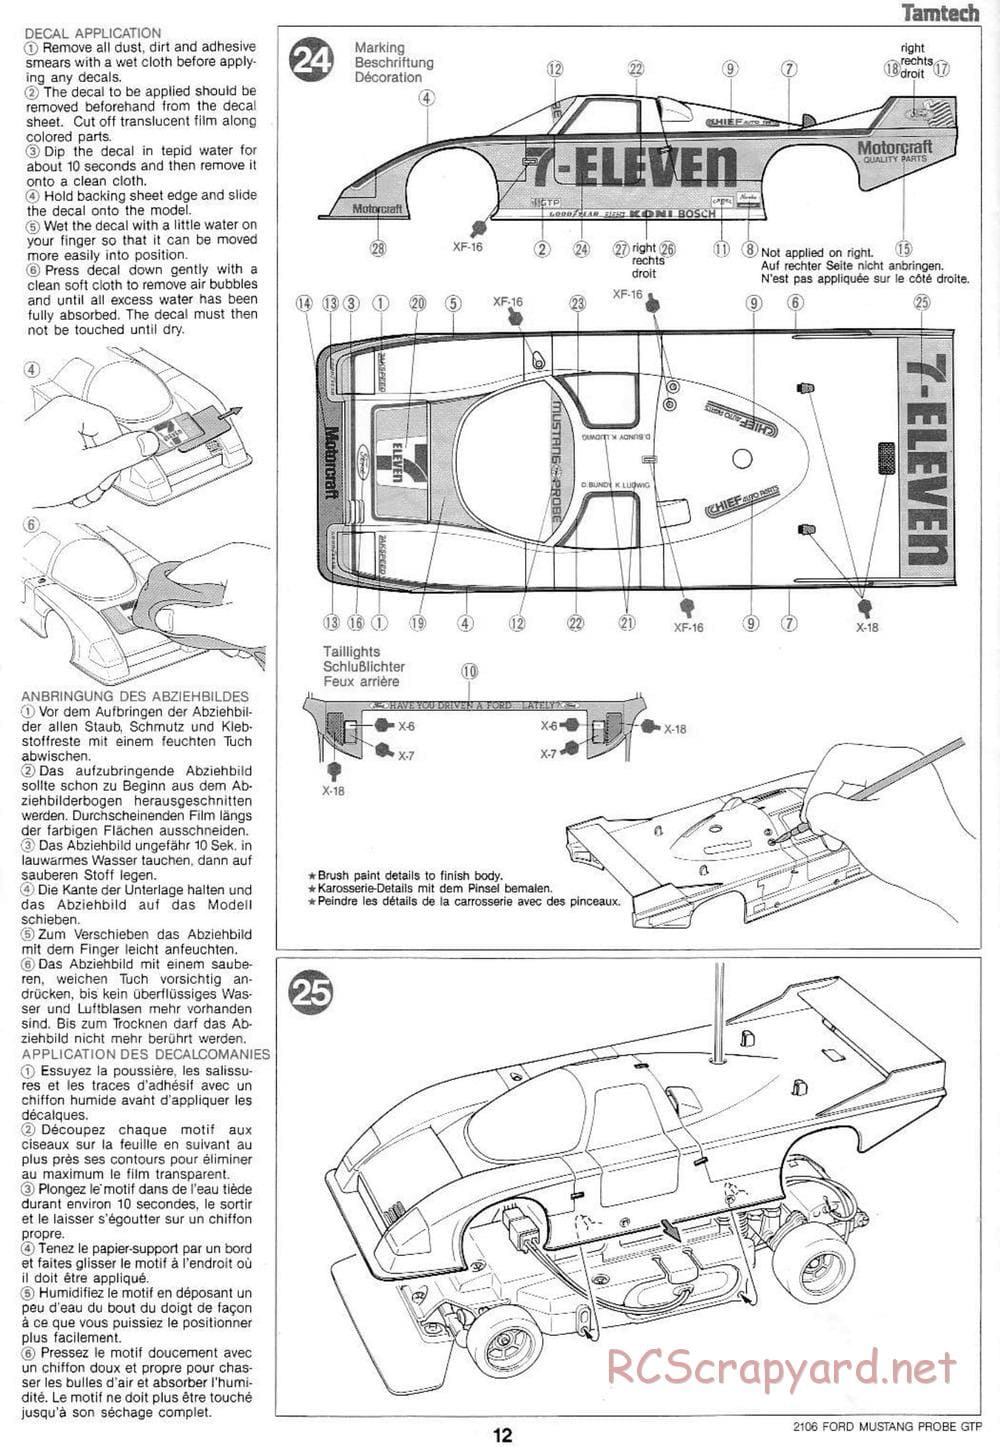 Tamiya - Tamtech - Ford Mustang Probe GTP Chassis - Manual - Page 12